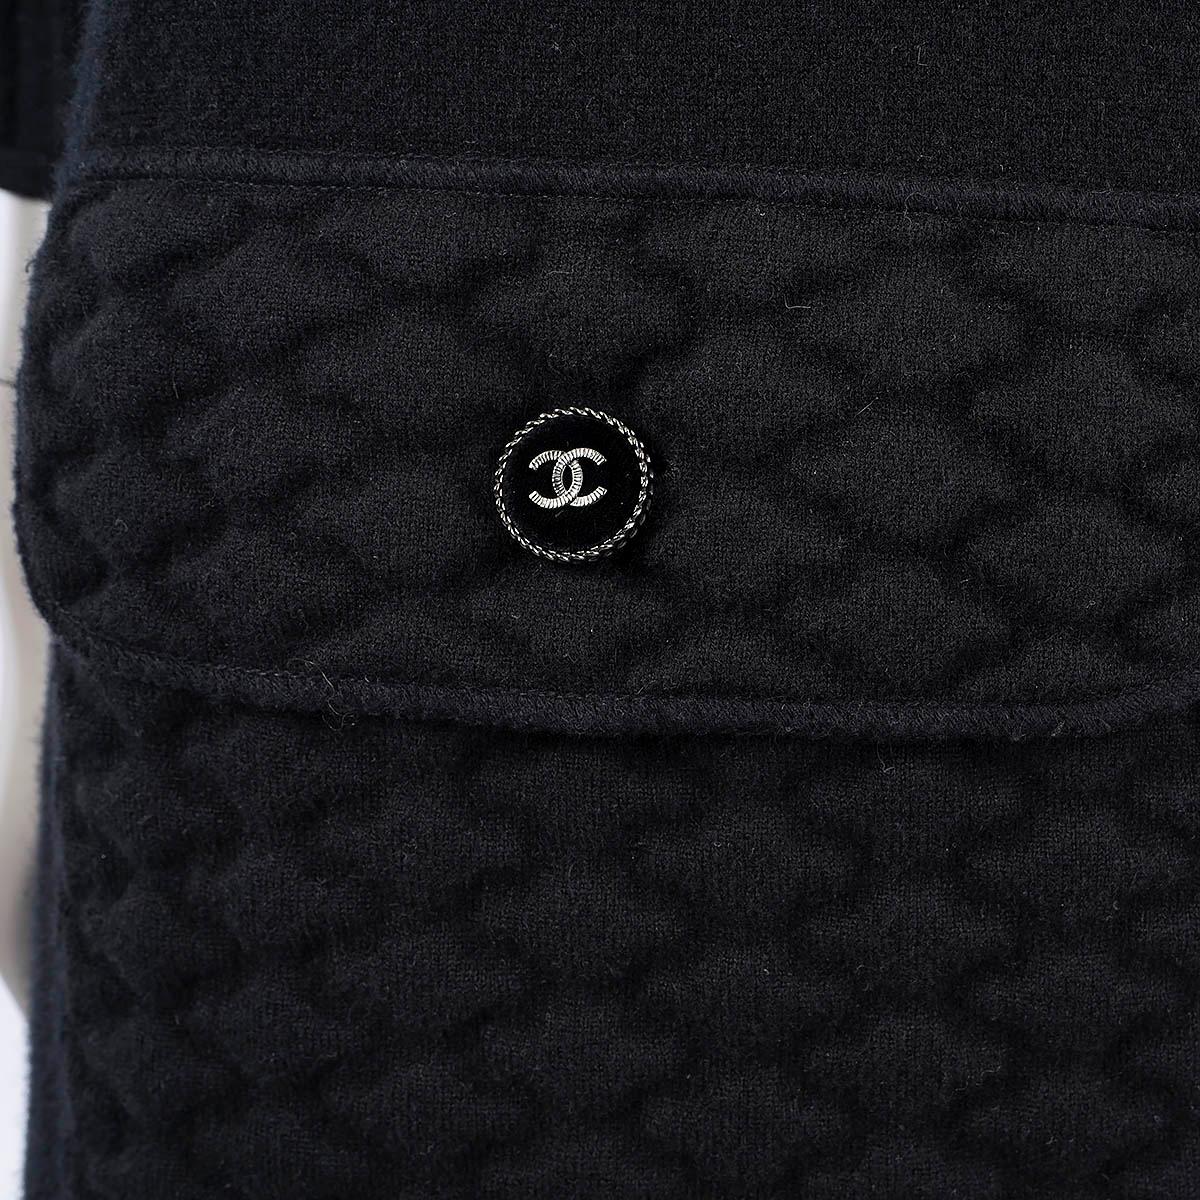 CHANEL black cashmere 2013 13A EDINBURG QUILTED POCKET KNIT Dress 36 XS For Sale 2